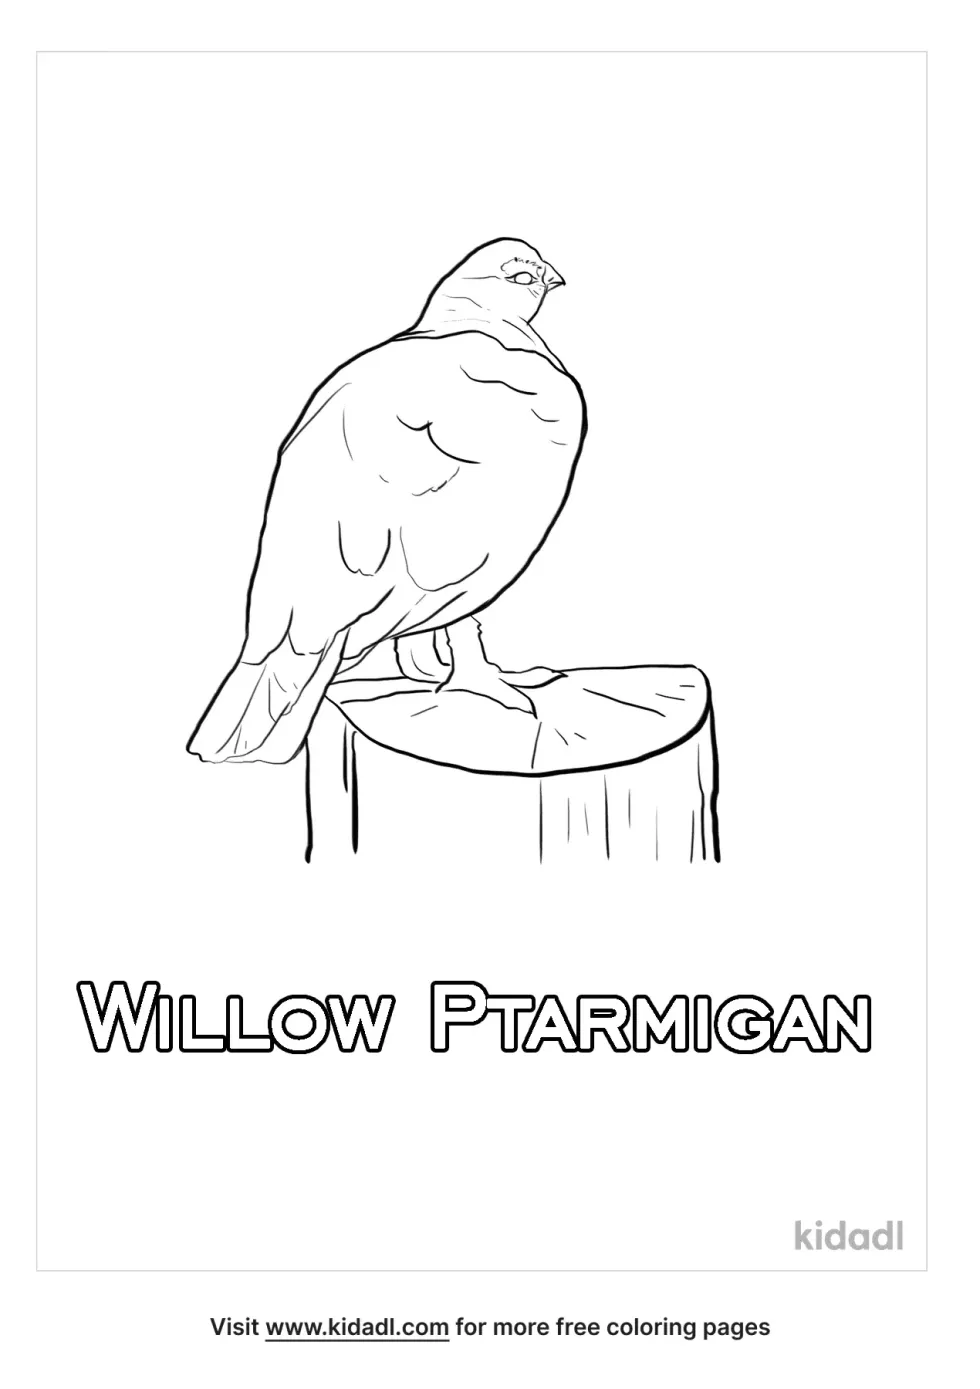 Willow Ptarmigan And Facts